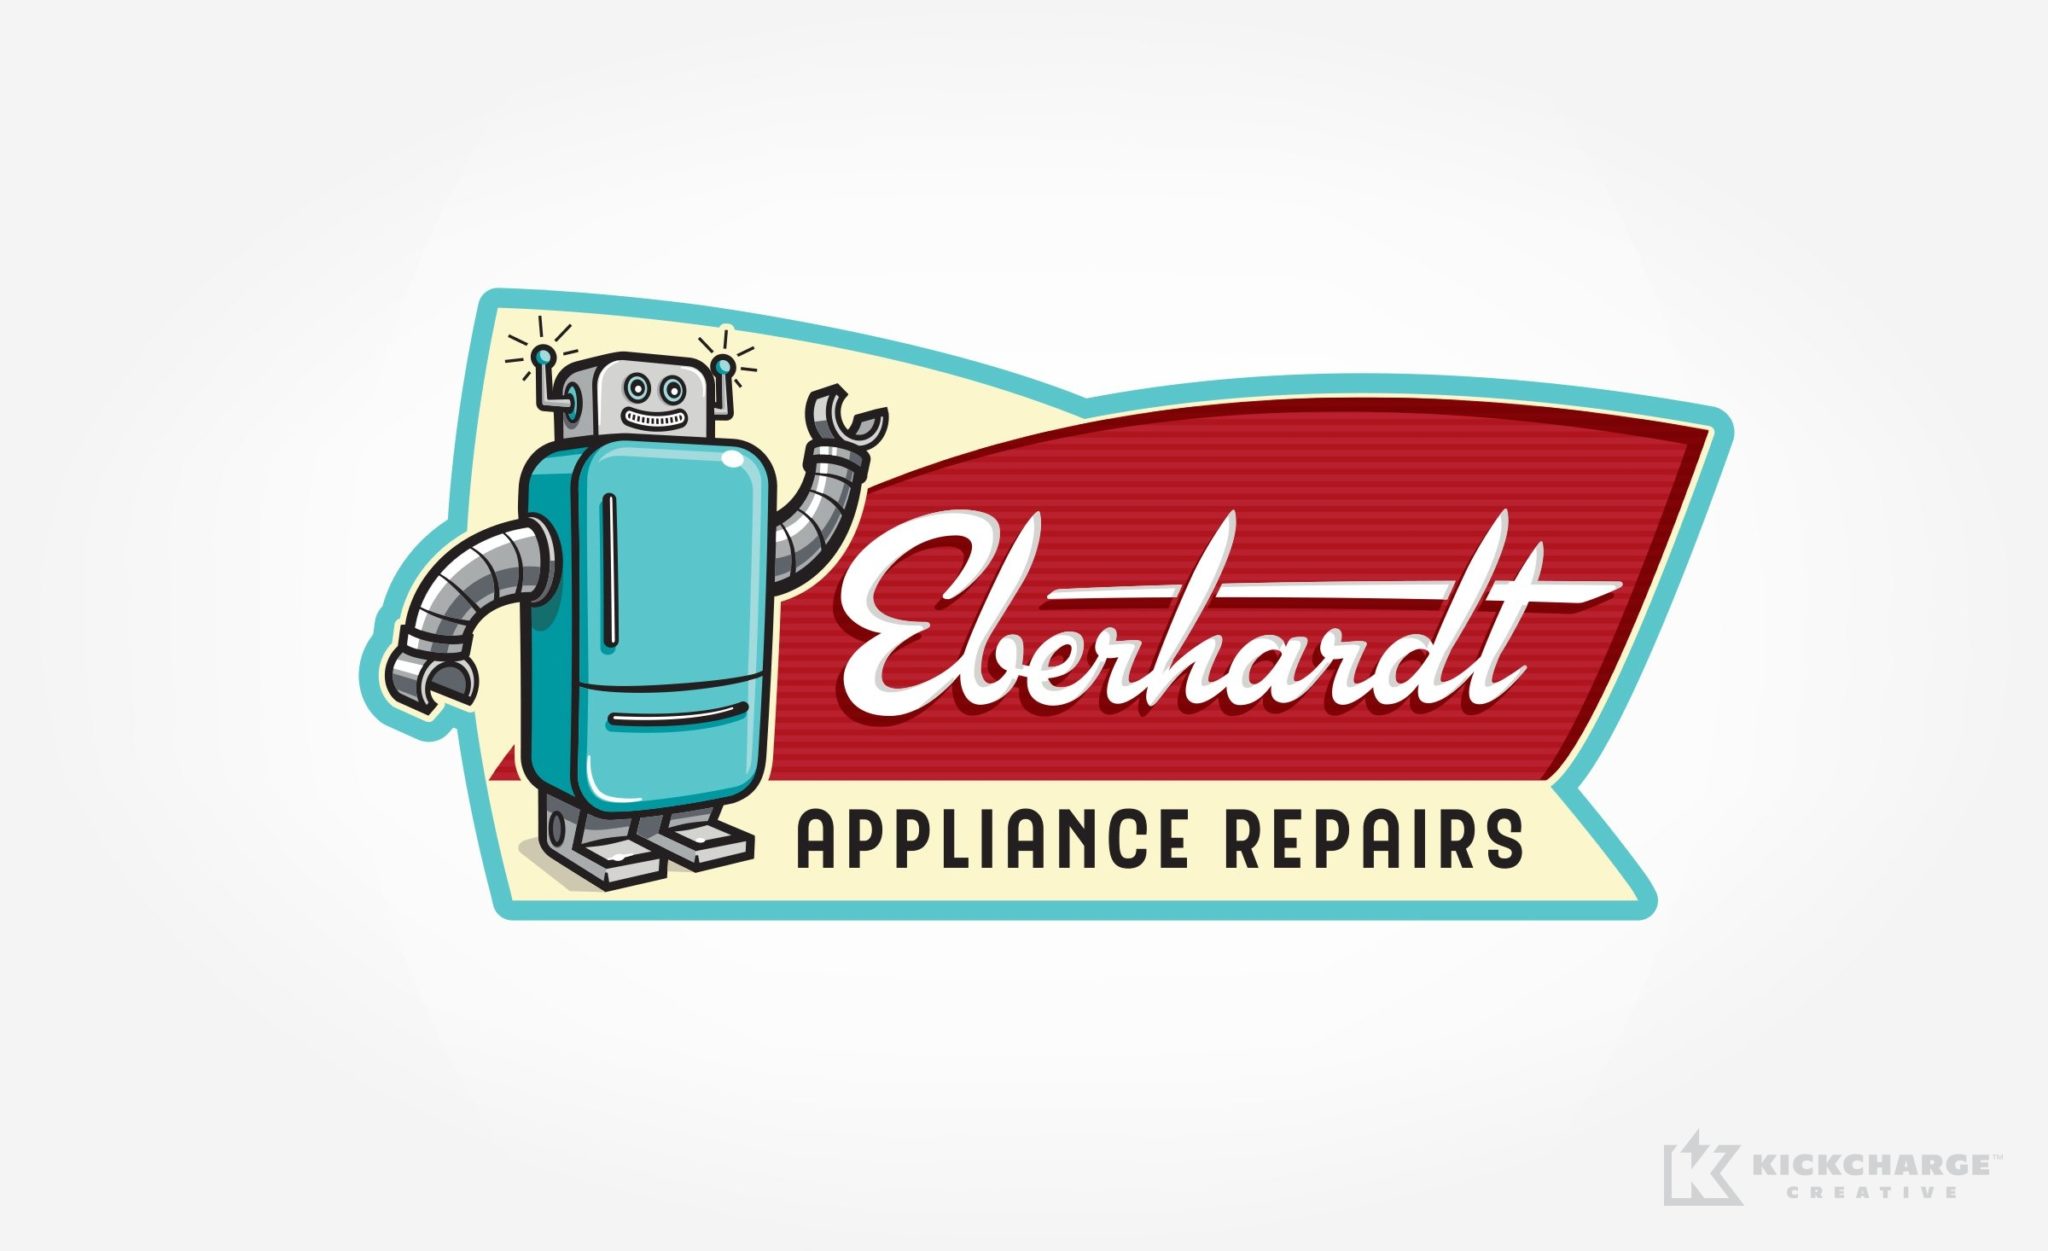 Eberhardt Appliance Repairs